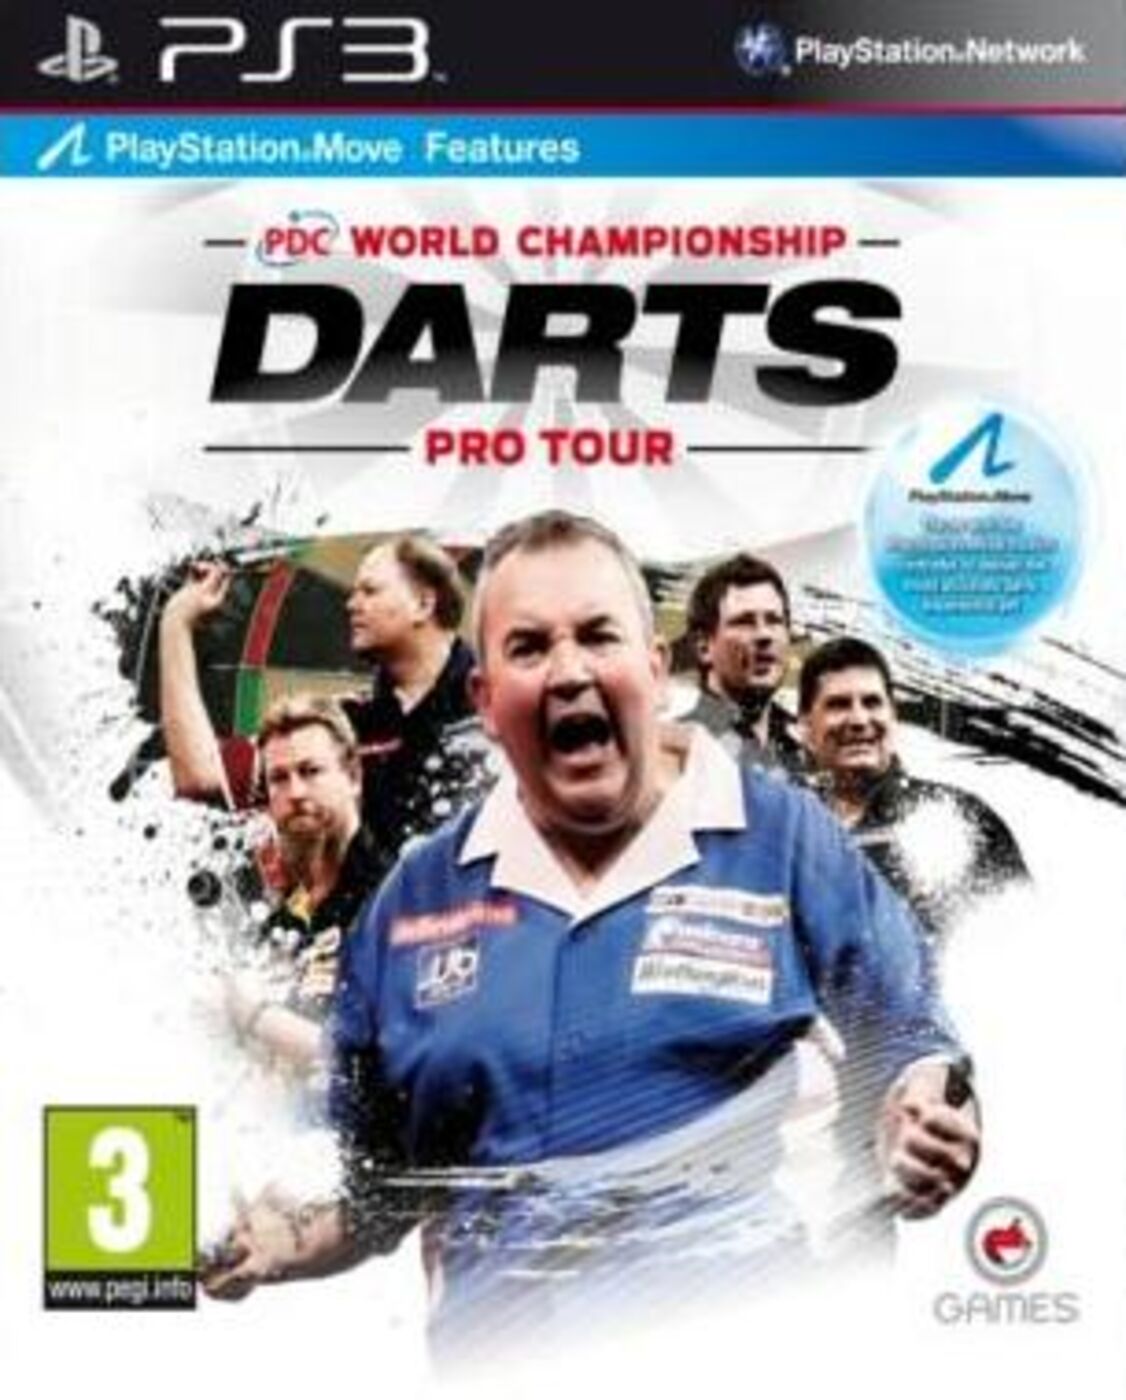 pdc world championship darts 2008 full free pc game